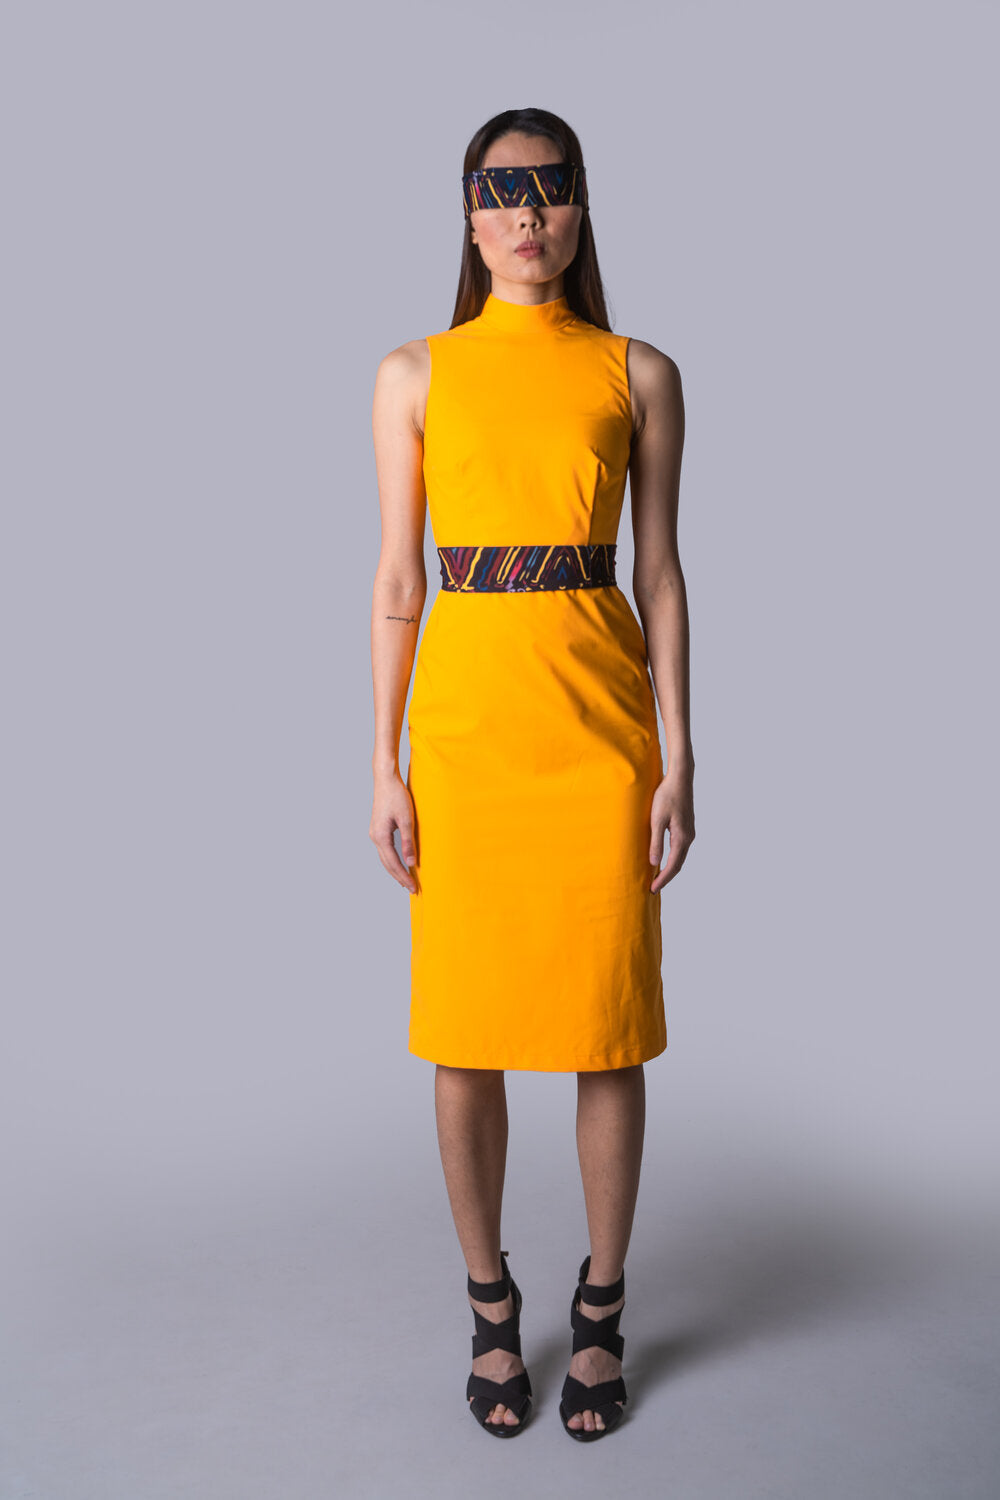 Mandarin Collar Sheath Dress with Sash - sold out